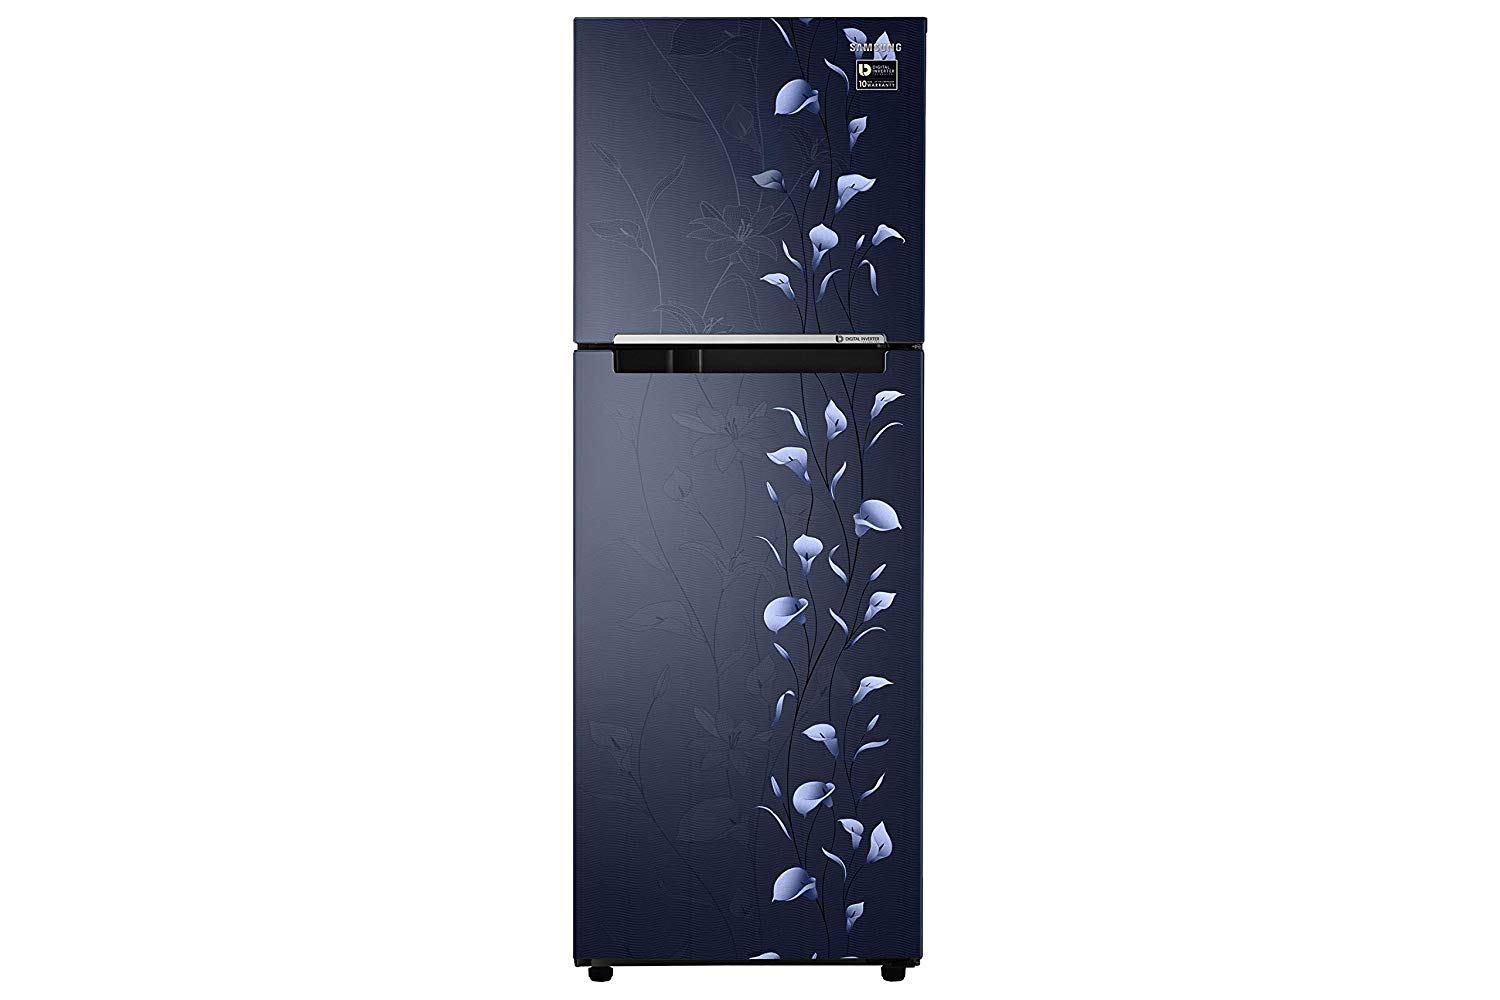 samsung refrigerator